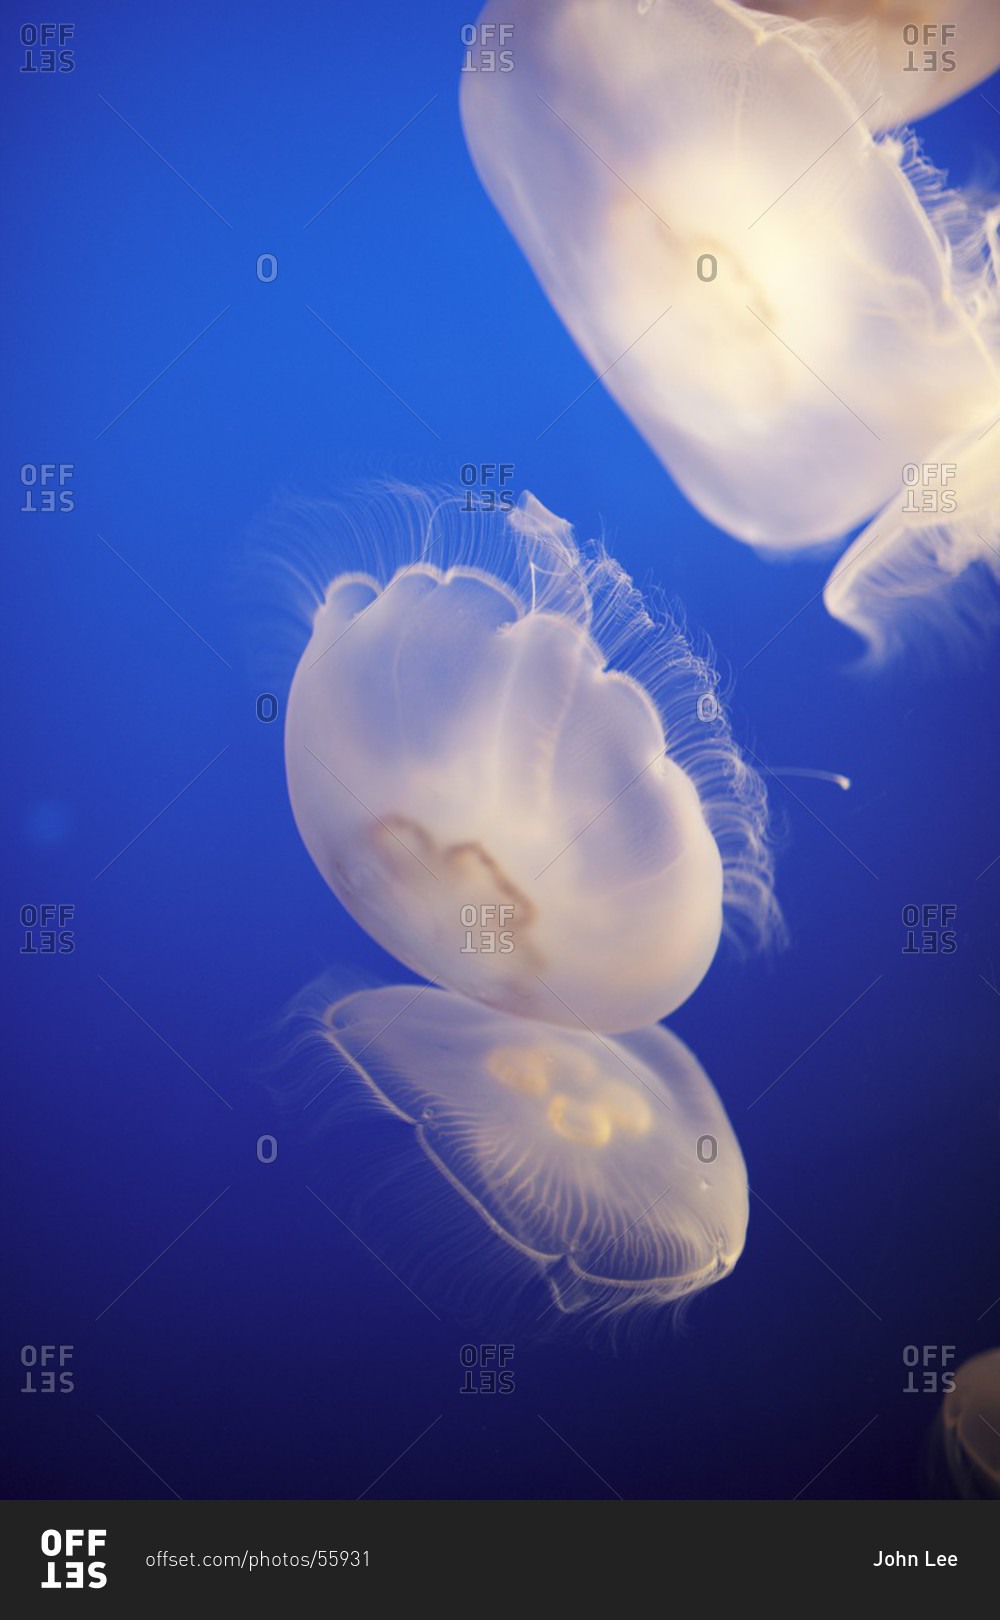 Moon Jellyfish on public display in Monterey, California